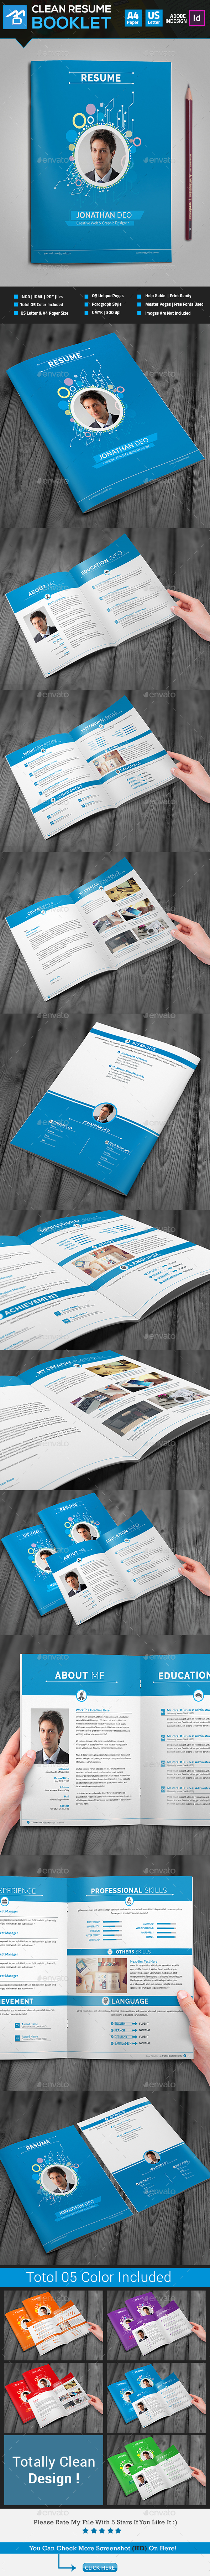 Resume Booklet Design _8 Pages